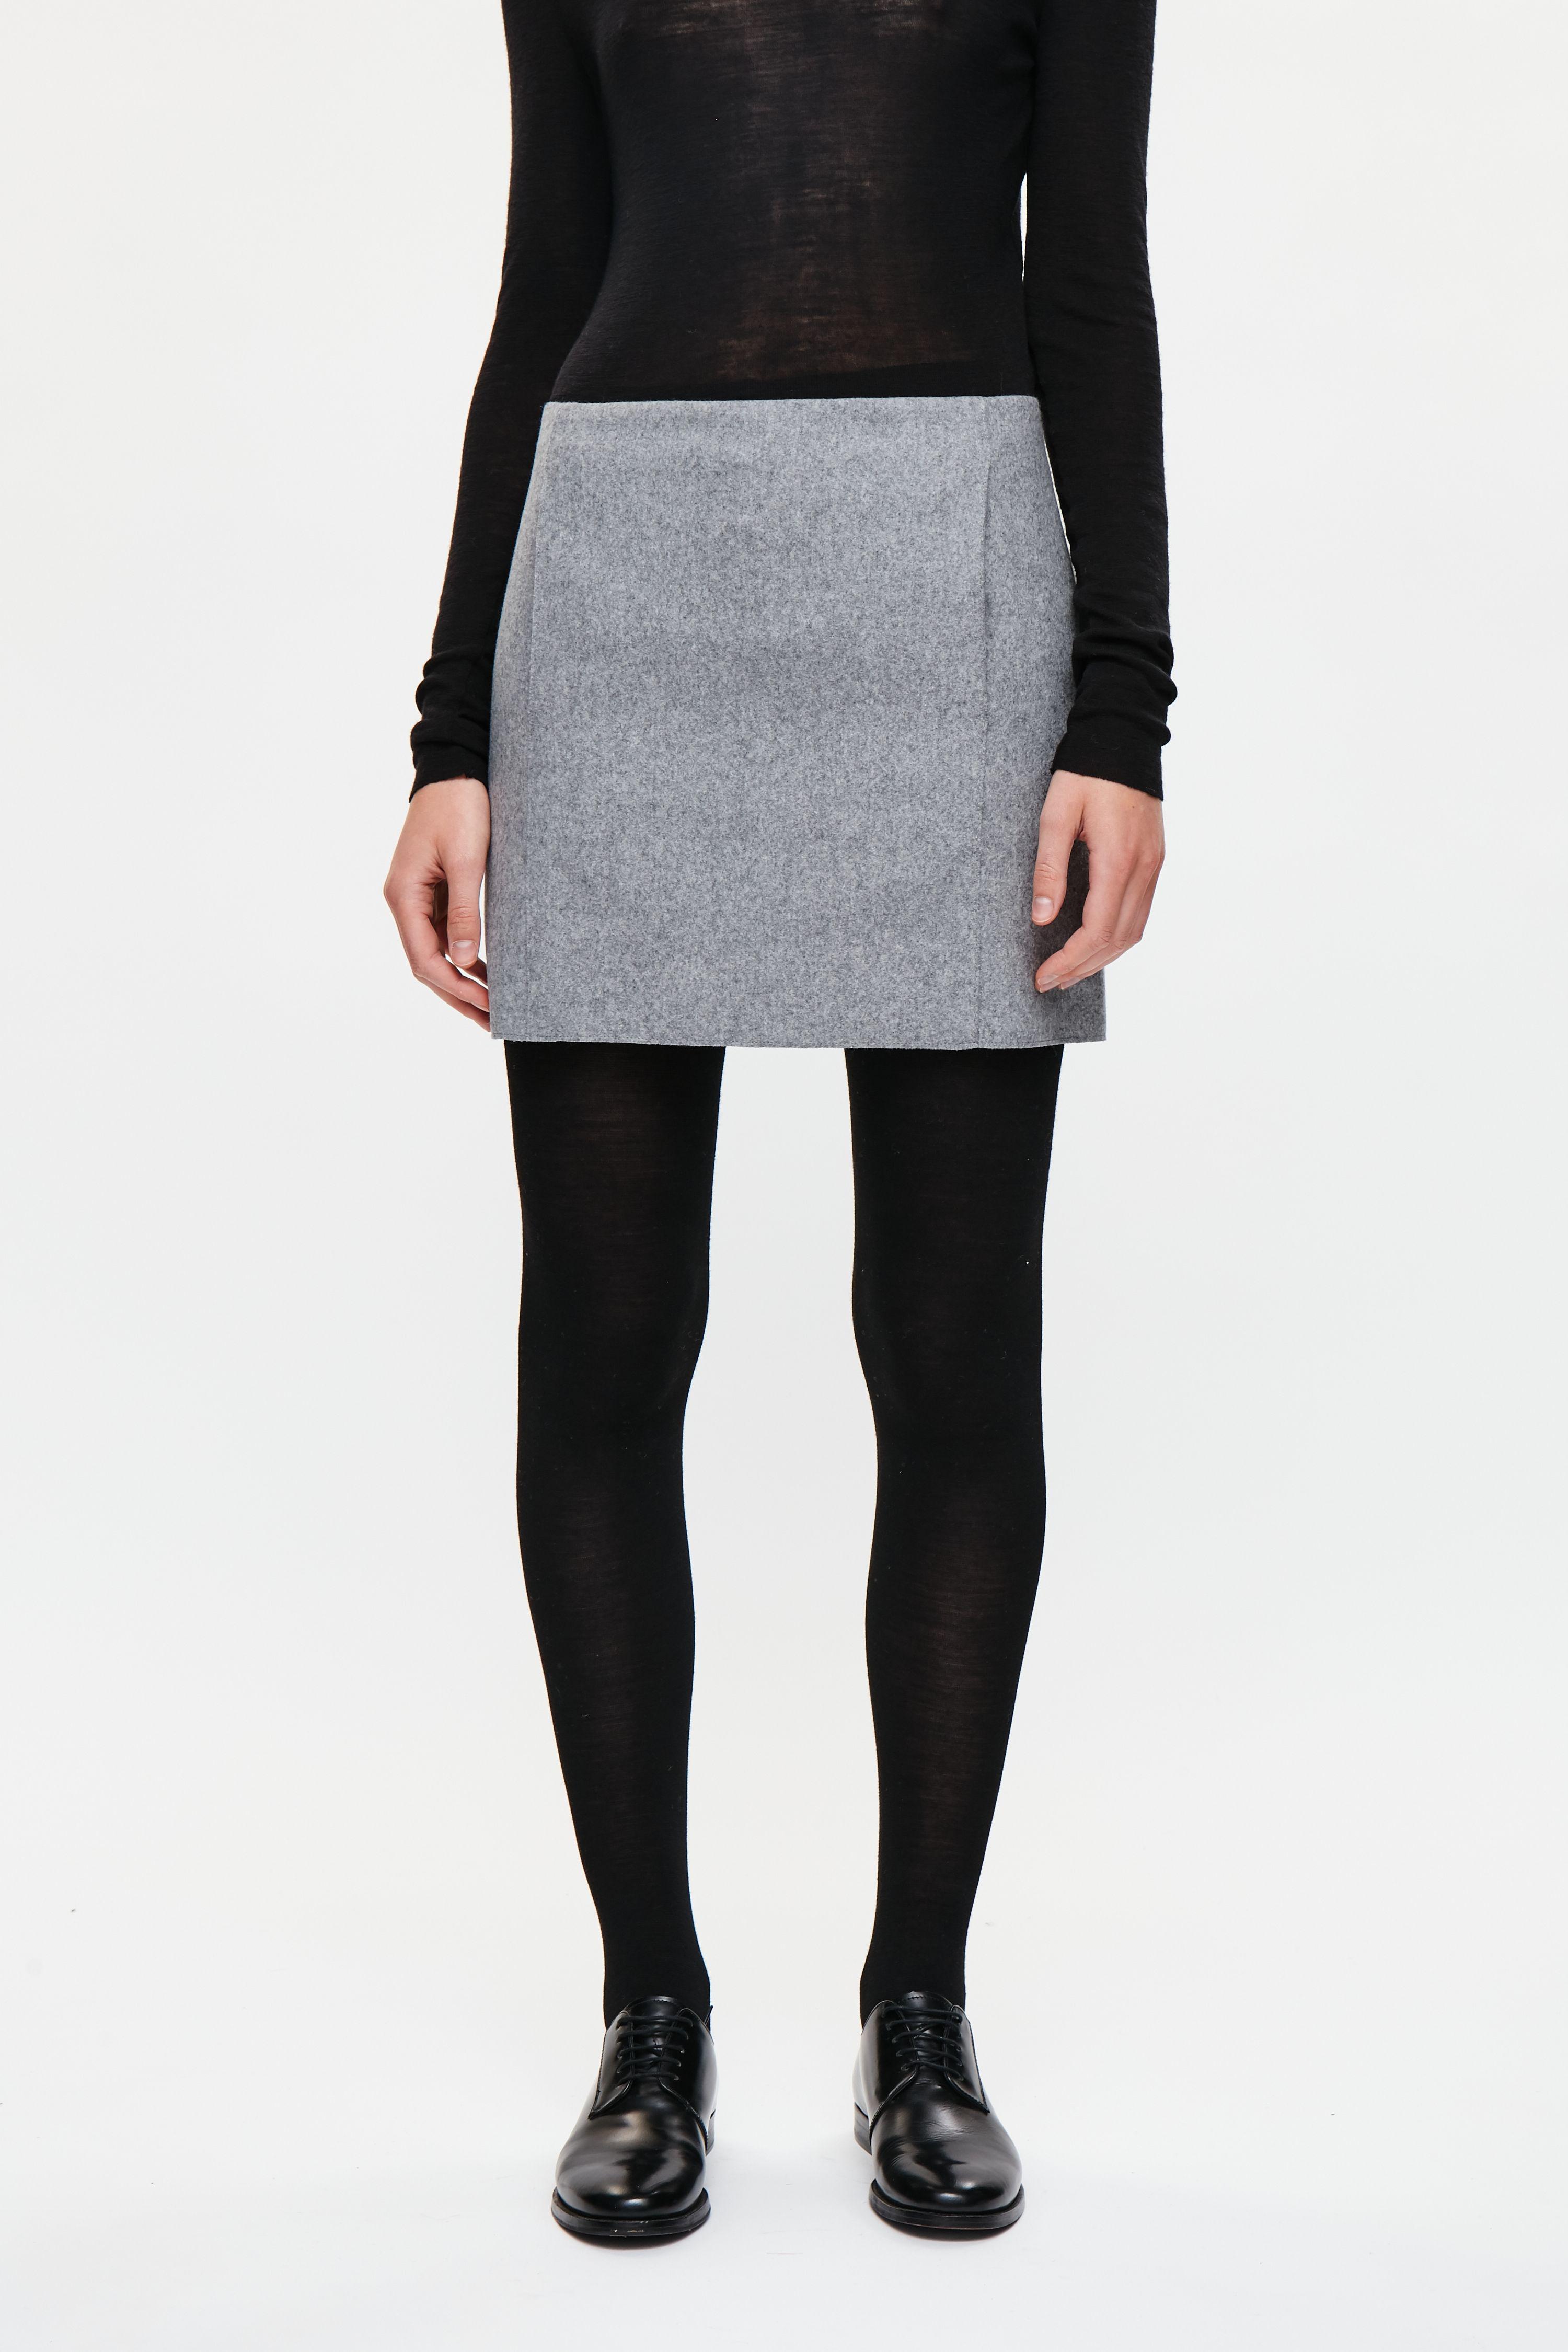 COS Short Wool Skirt in Grey (Gray) - Lyst